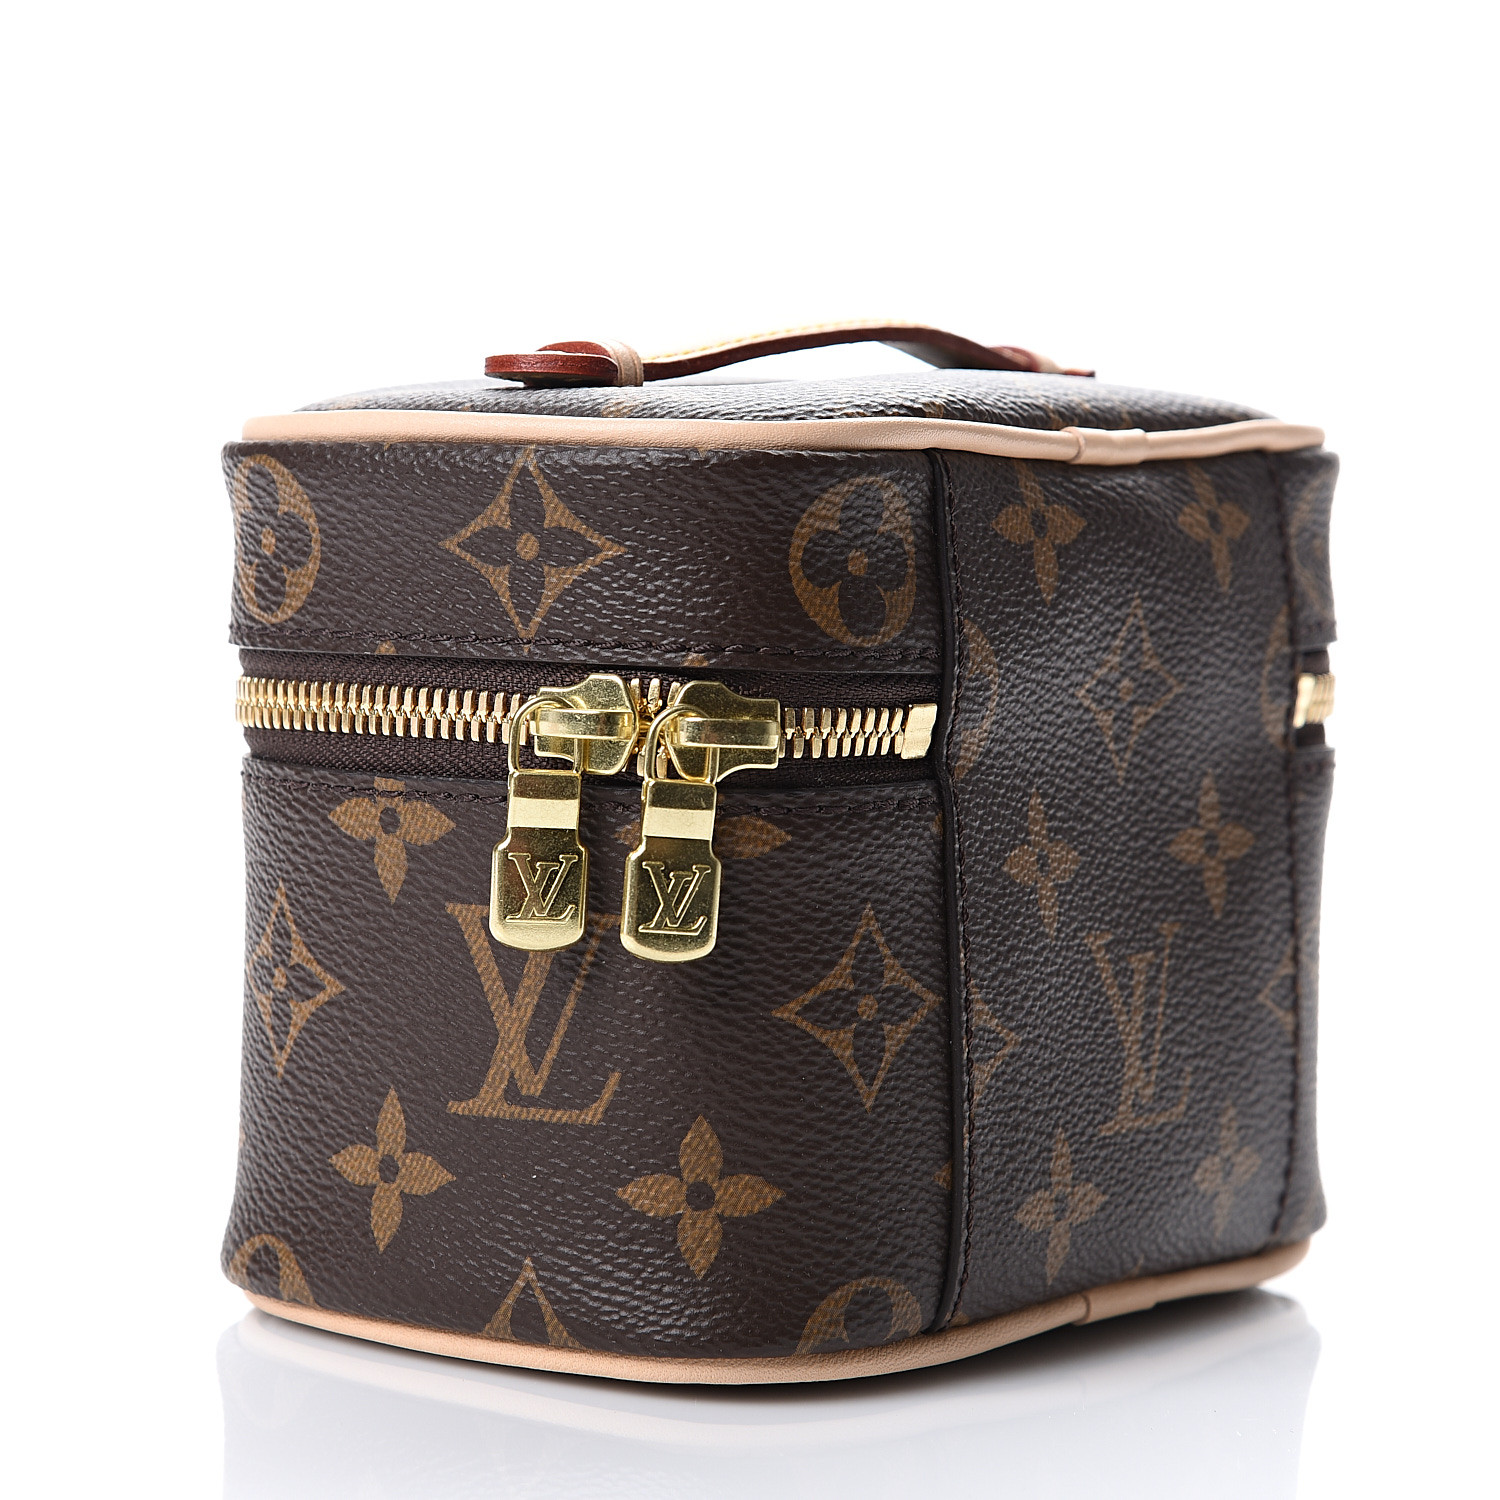 Fashionphile - Vanity Case: Bag, travel essential or both? Let us